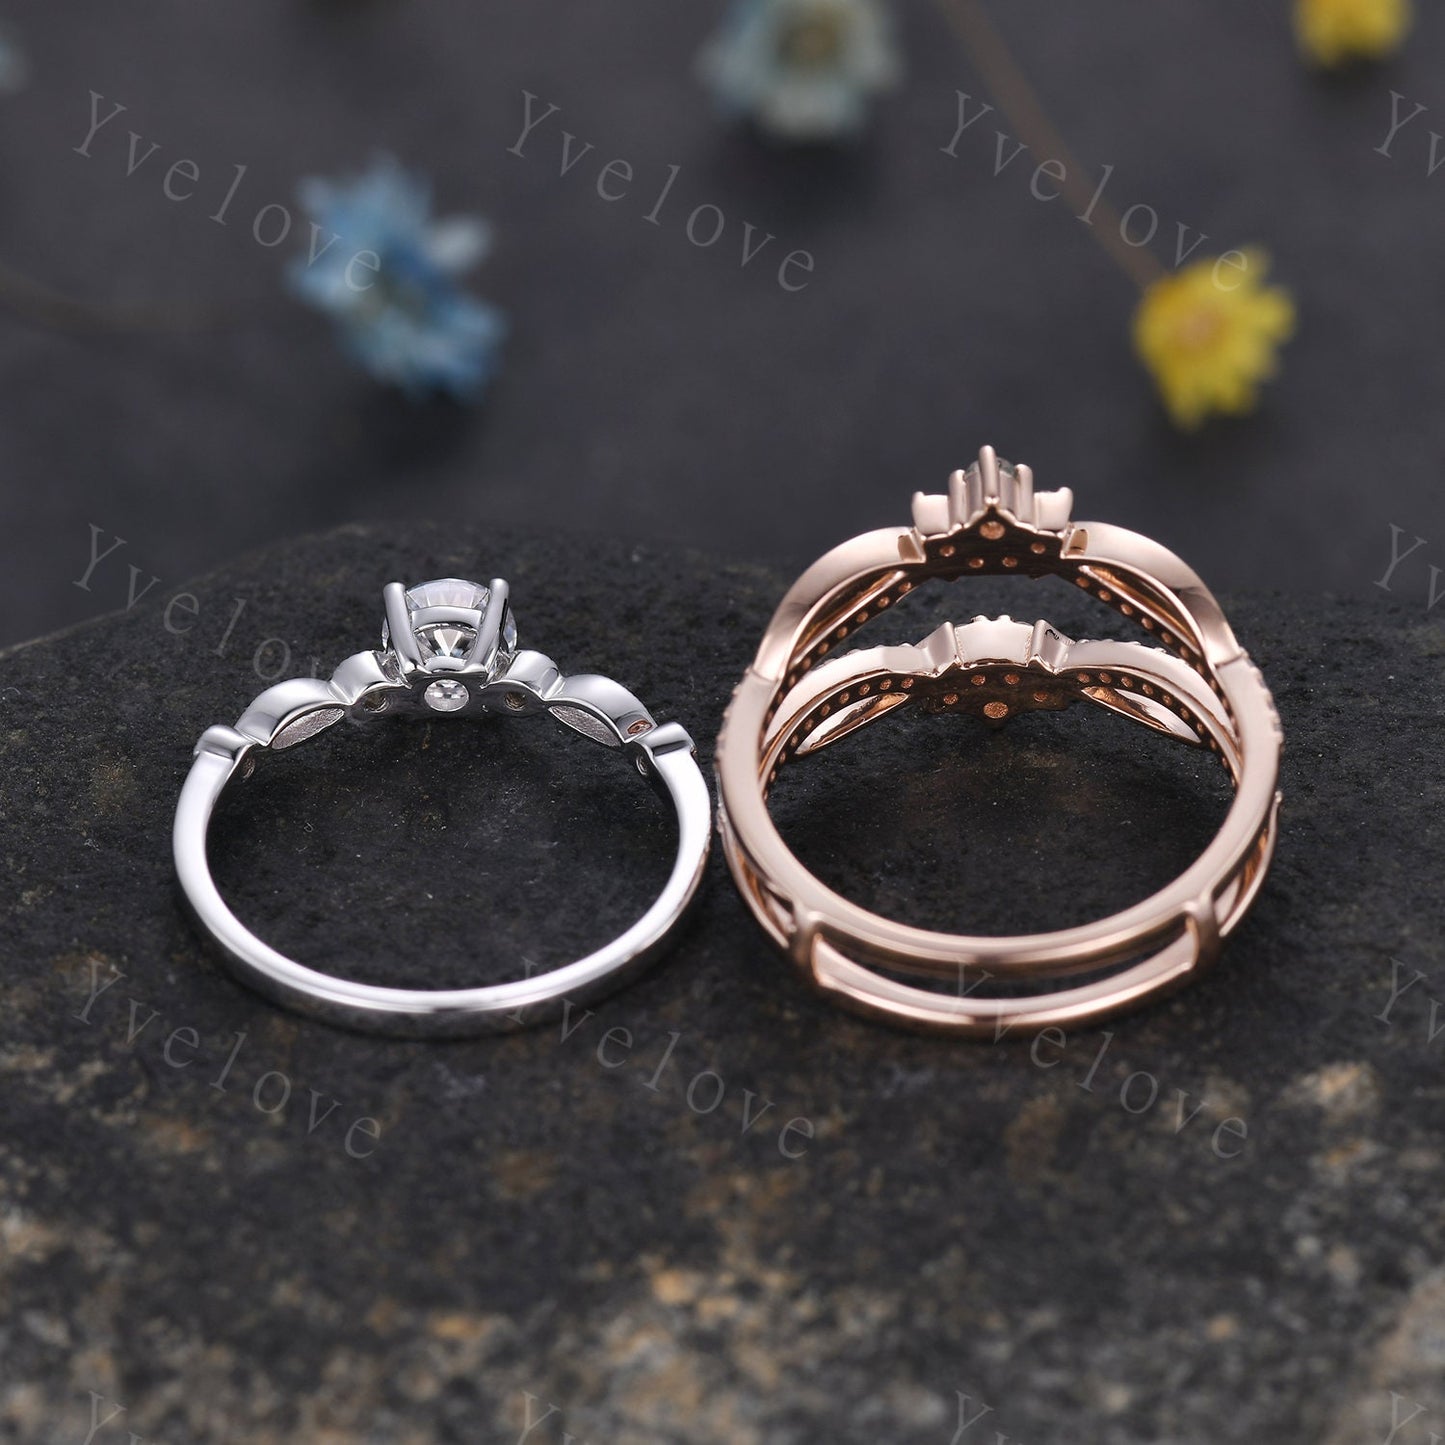 Art deco round moissanite engagement ring set,enhancer ring,moss agate moissanite stacking matching wedding band,bridal promise ring gift